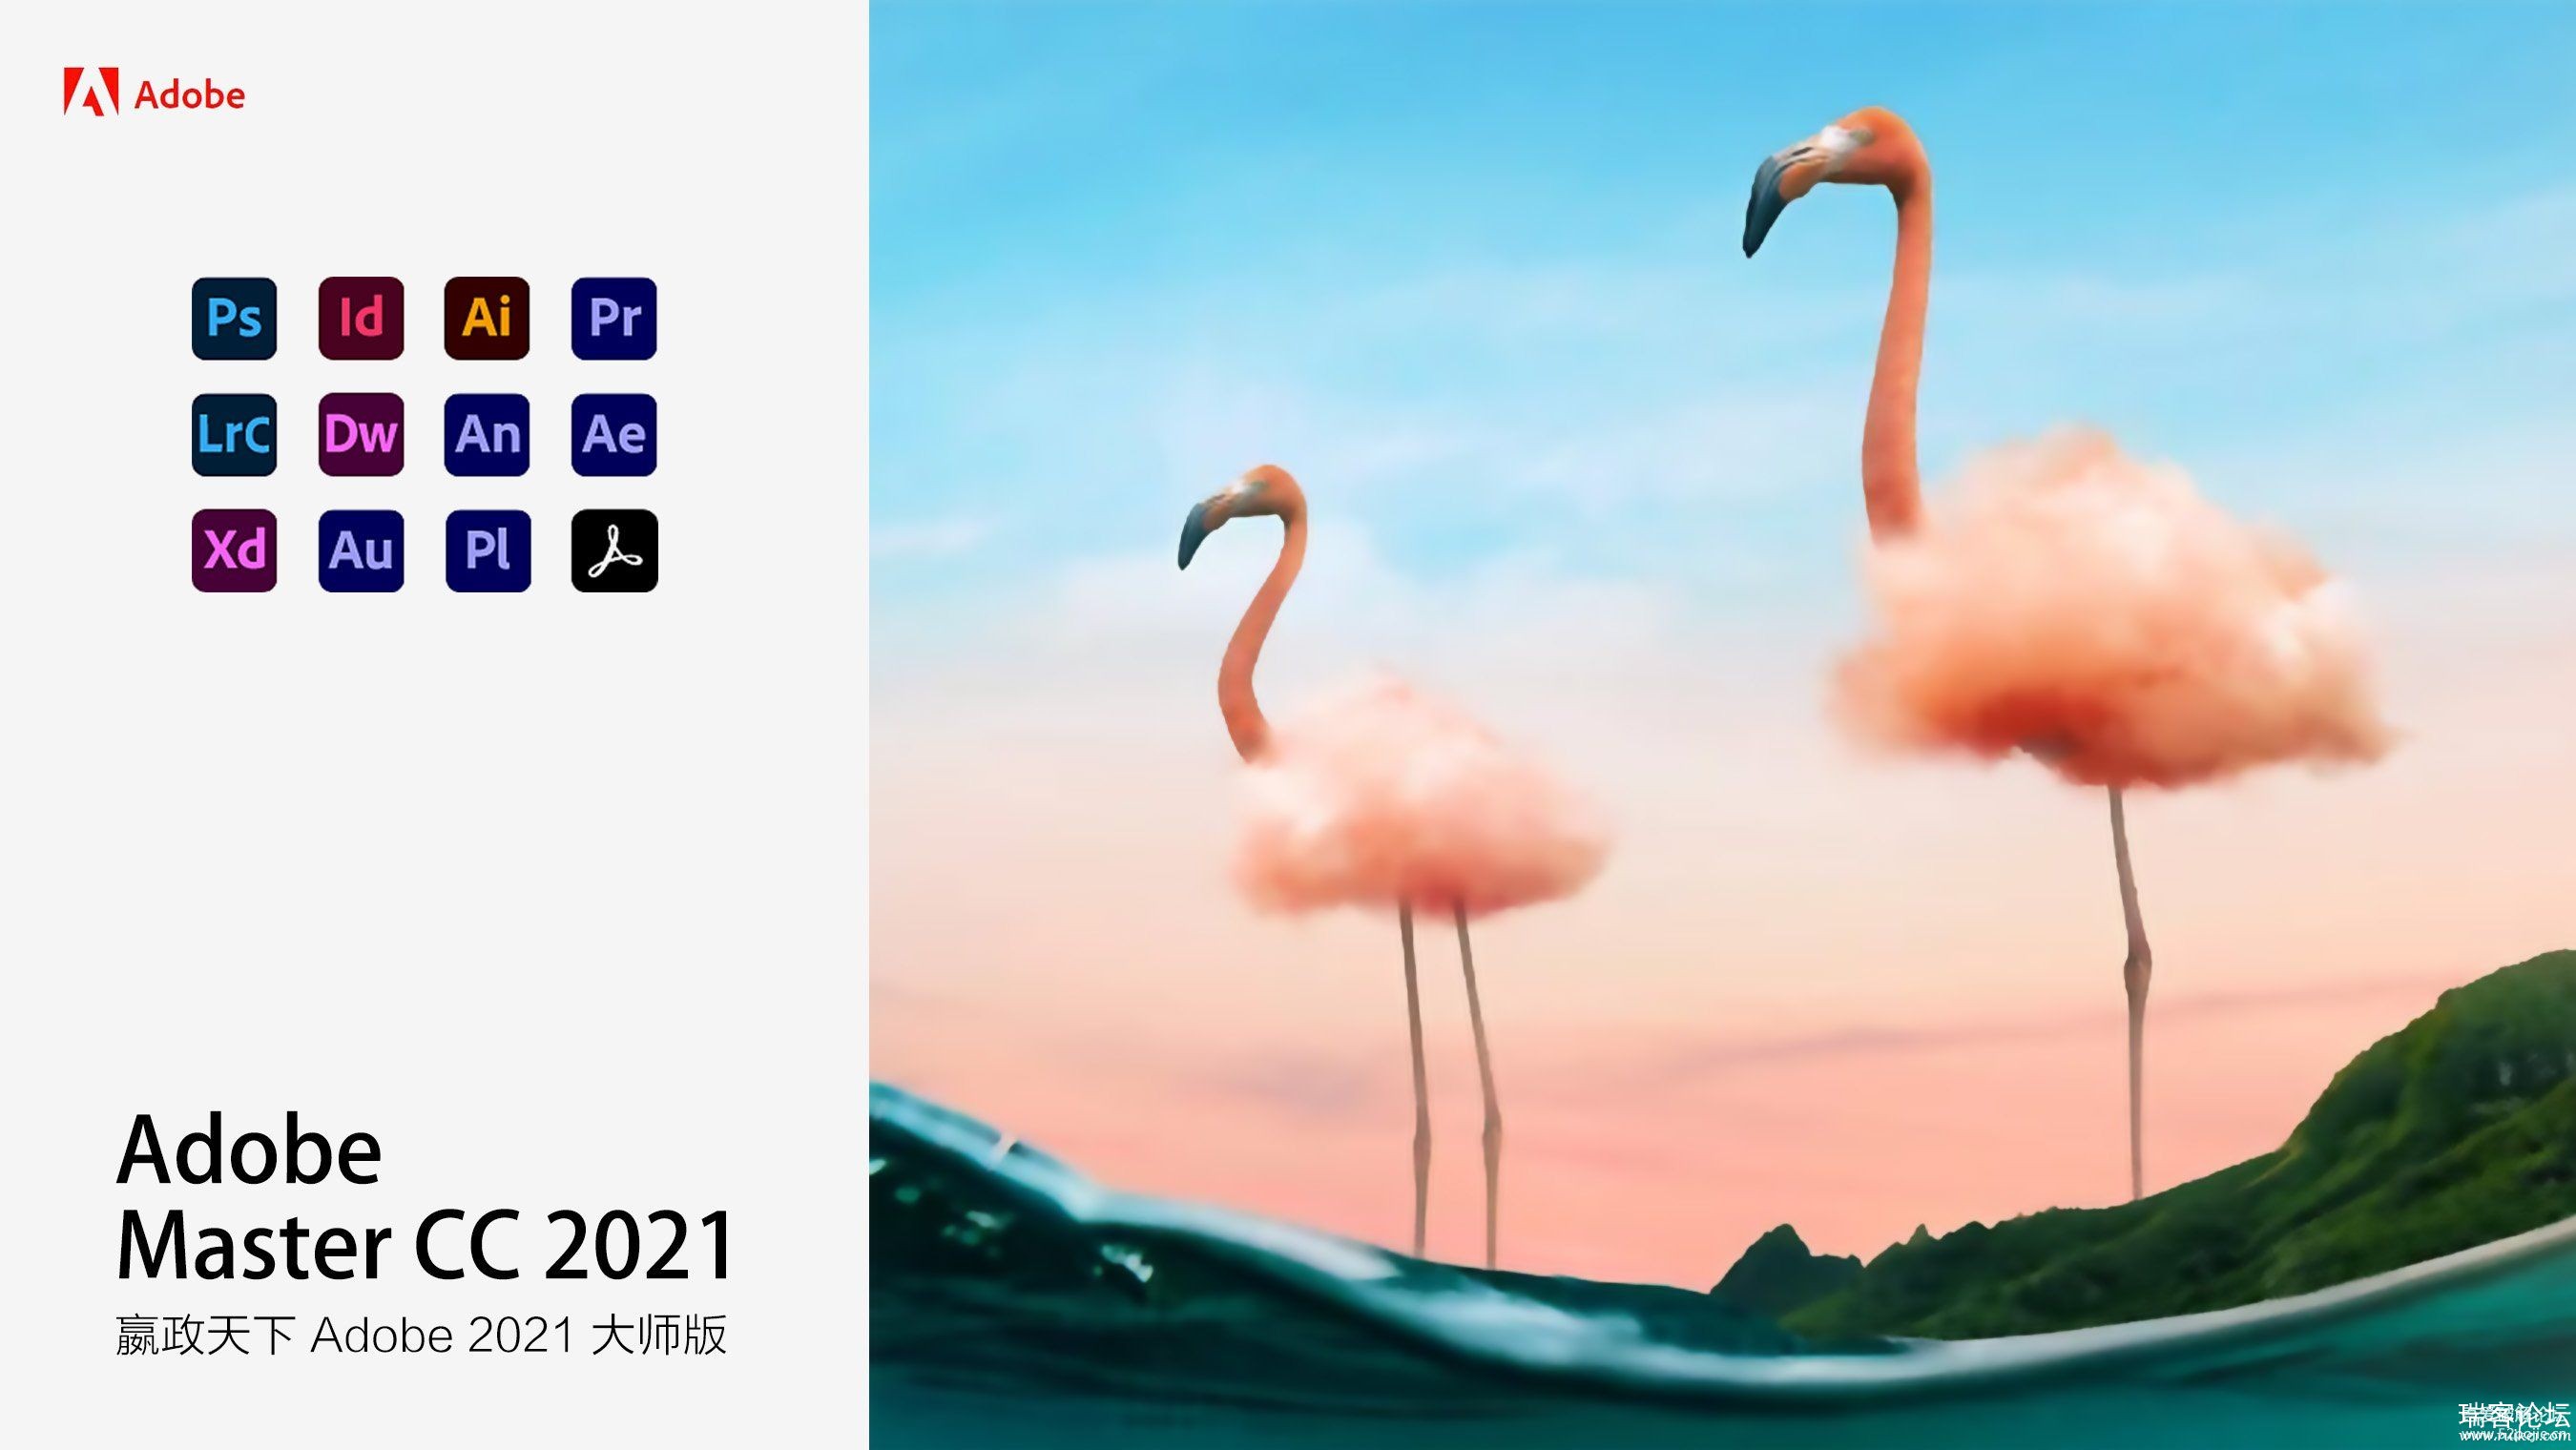 Adobe CC 2021 Masterʦ-1.jpg